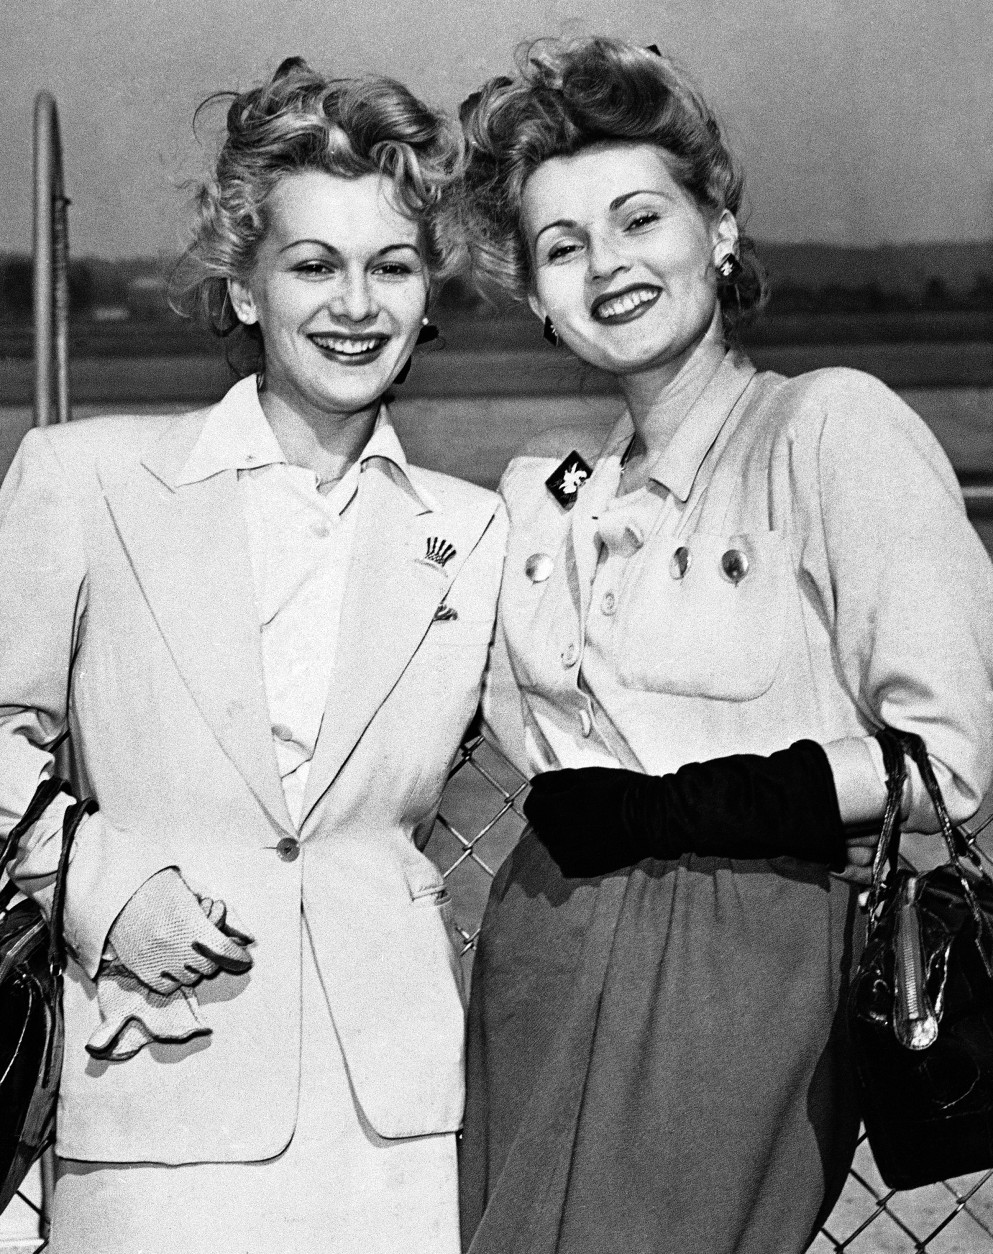 Zsa Zsa, right, and her sister Eva Gabor, left, in Omaha, Nebraska, June 20, 1941. (AP Photo)